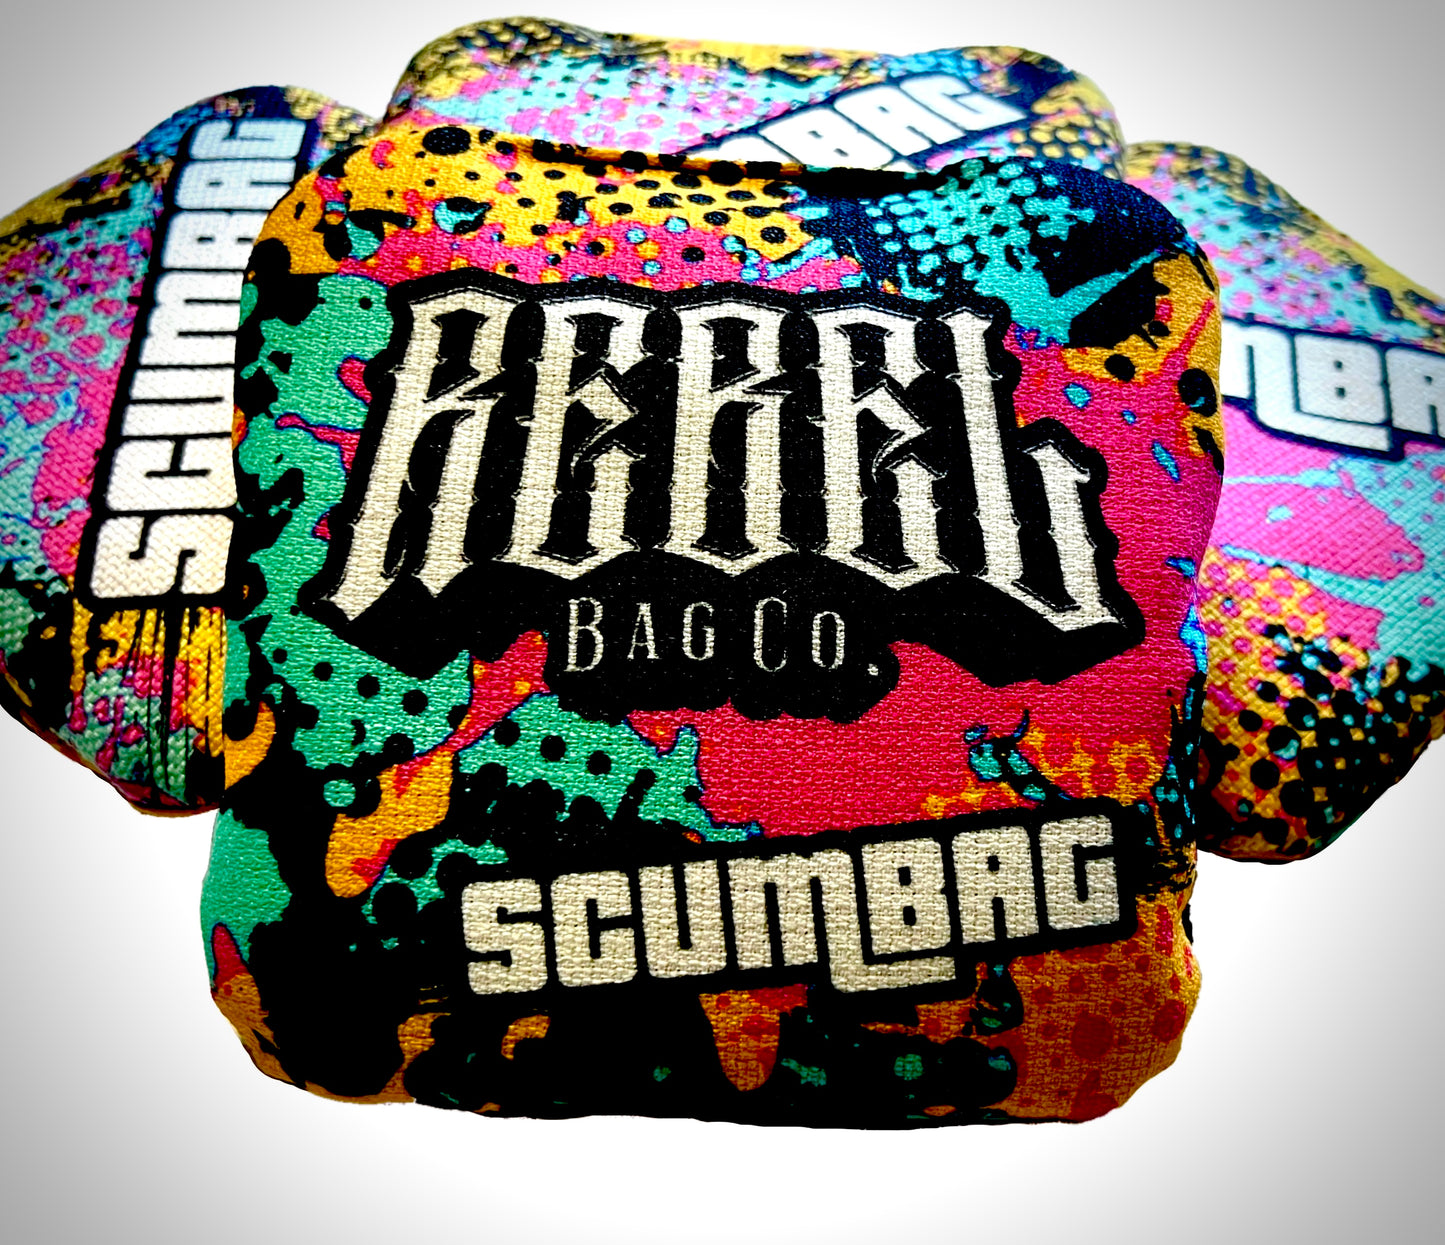 Scumbag - Release Edition